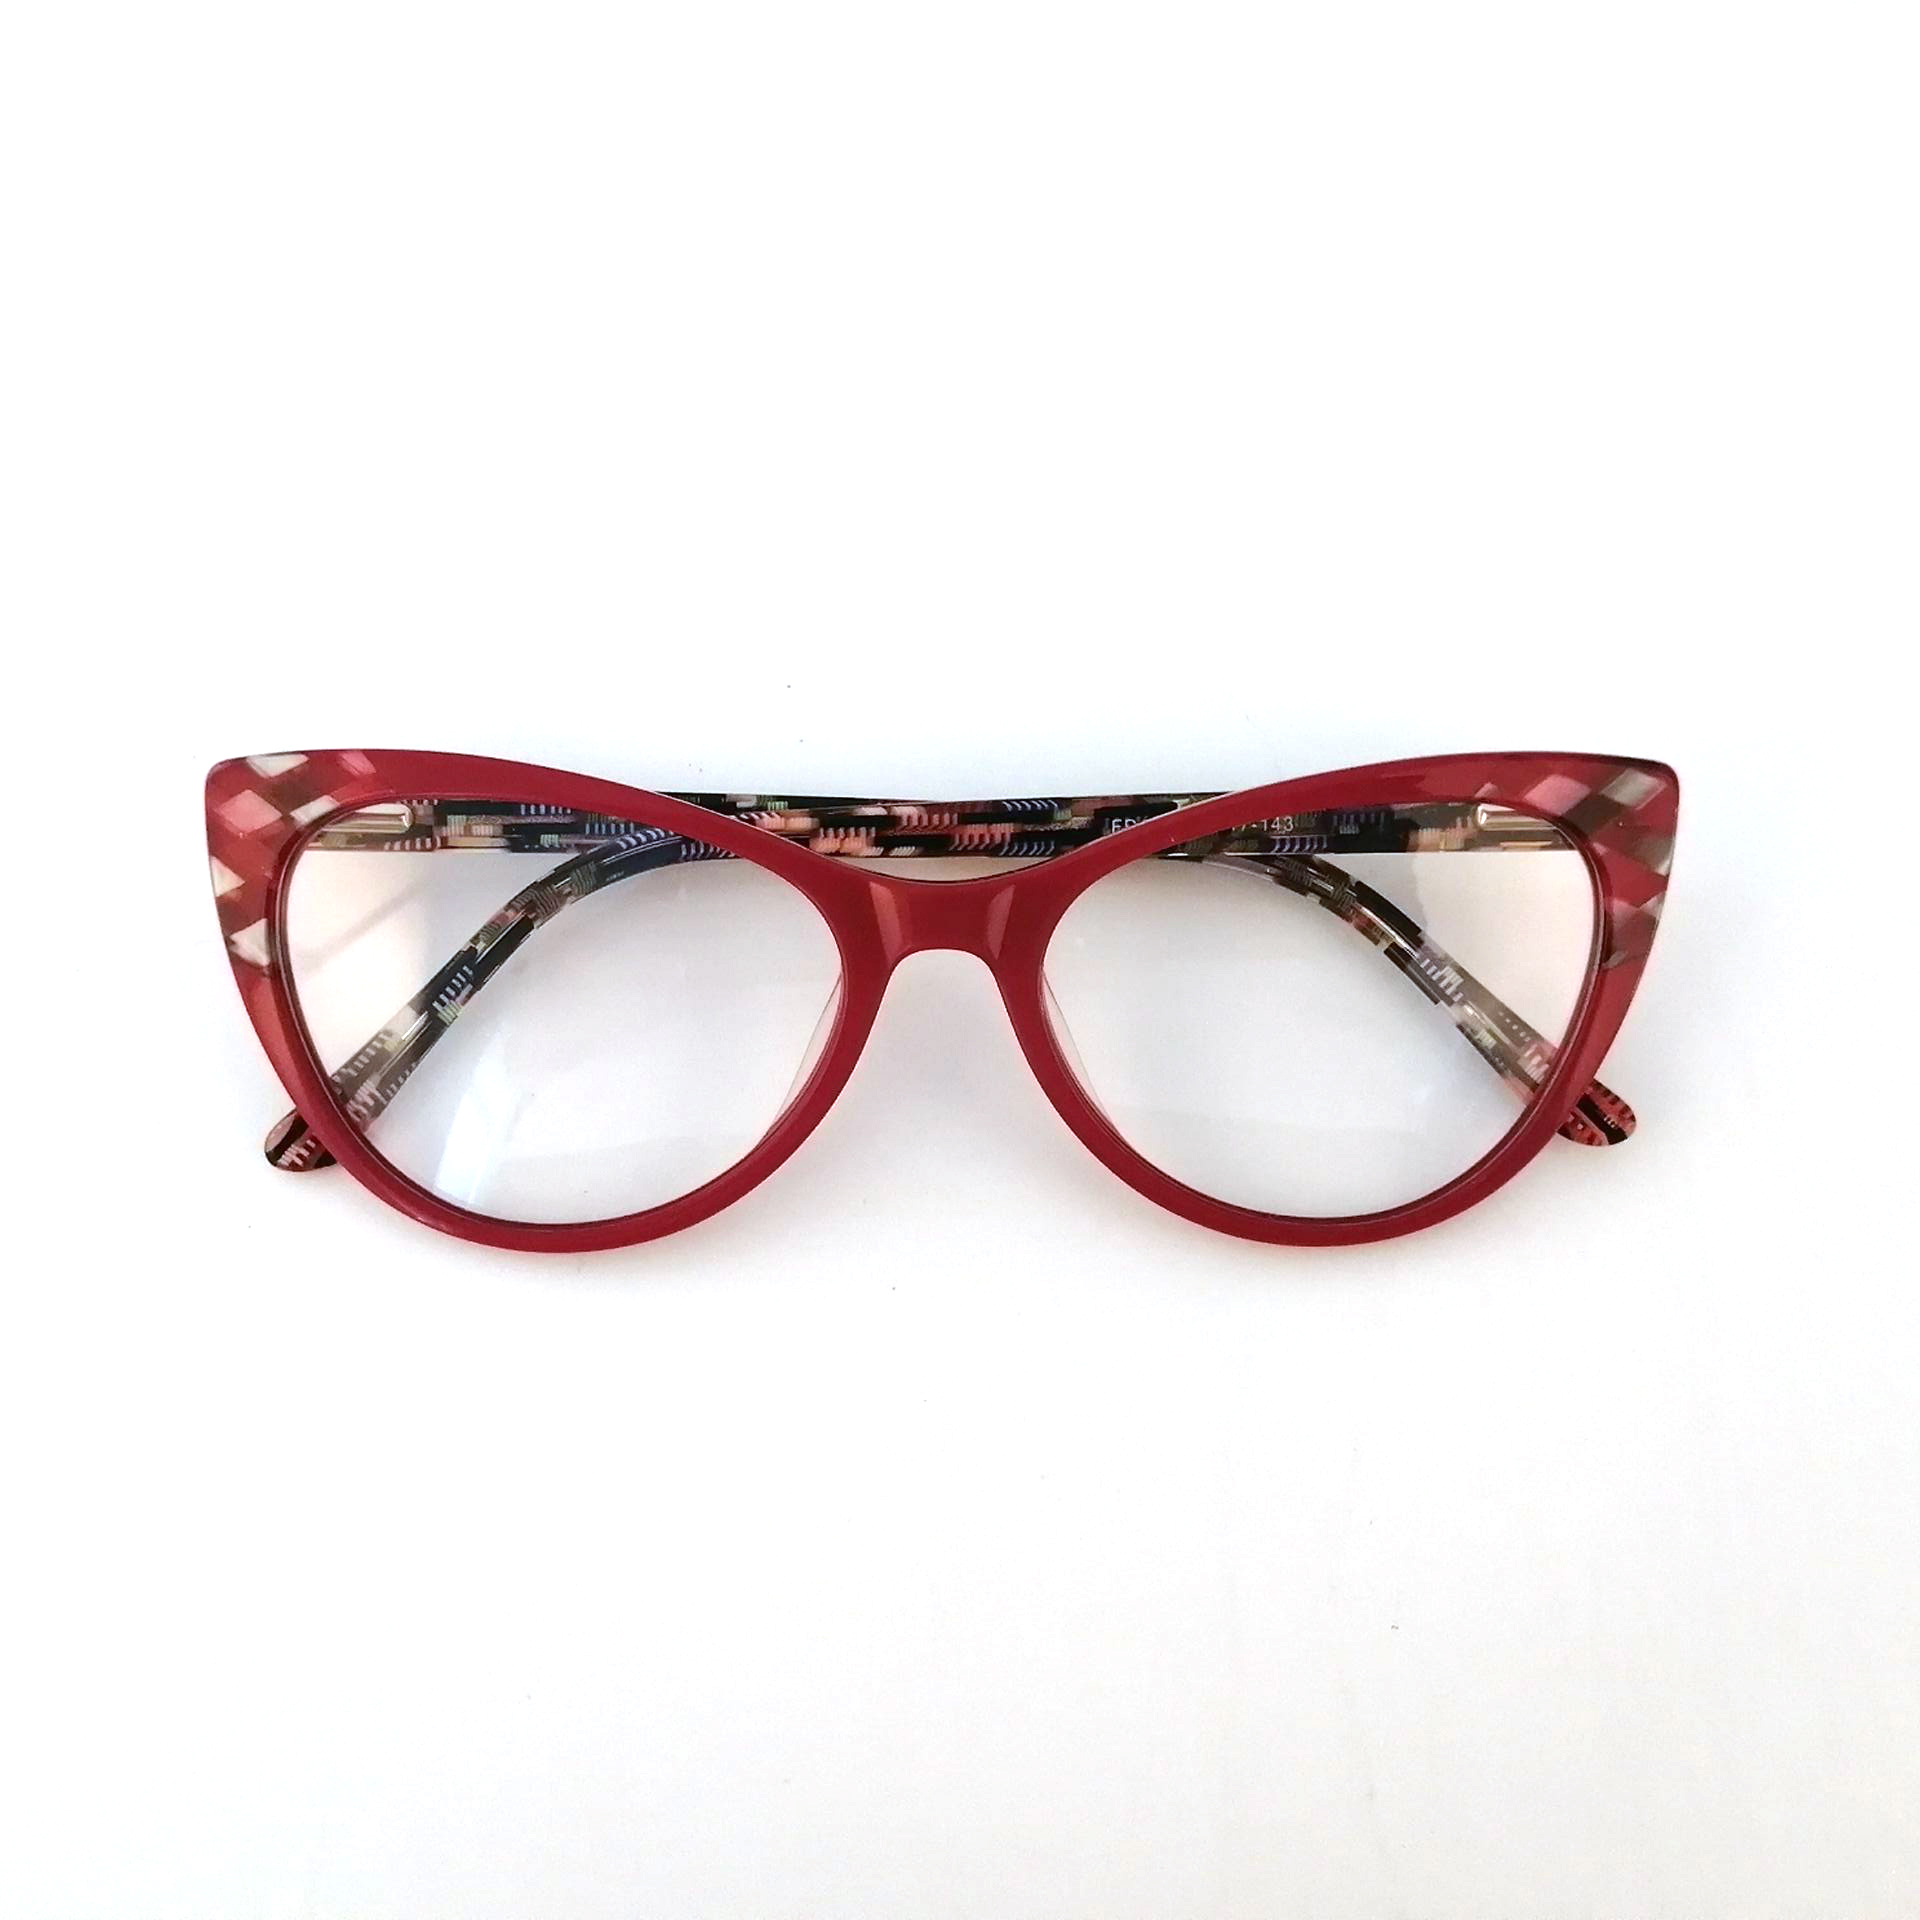 fashion acetate cat eye glasses frames women